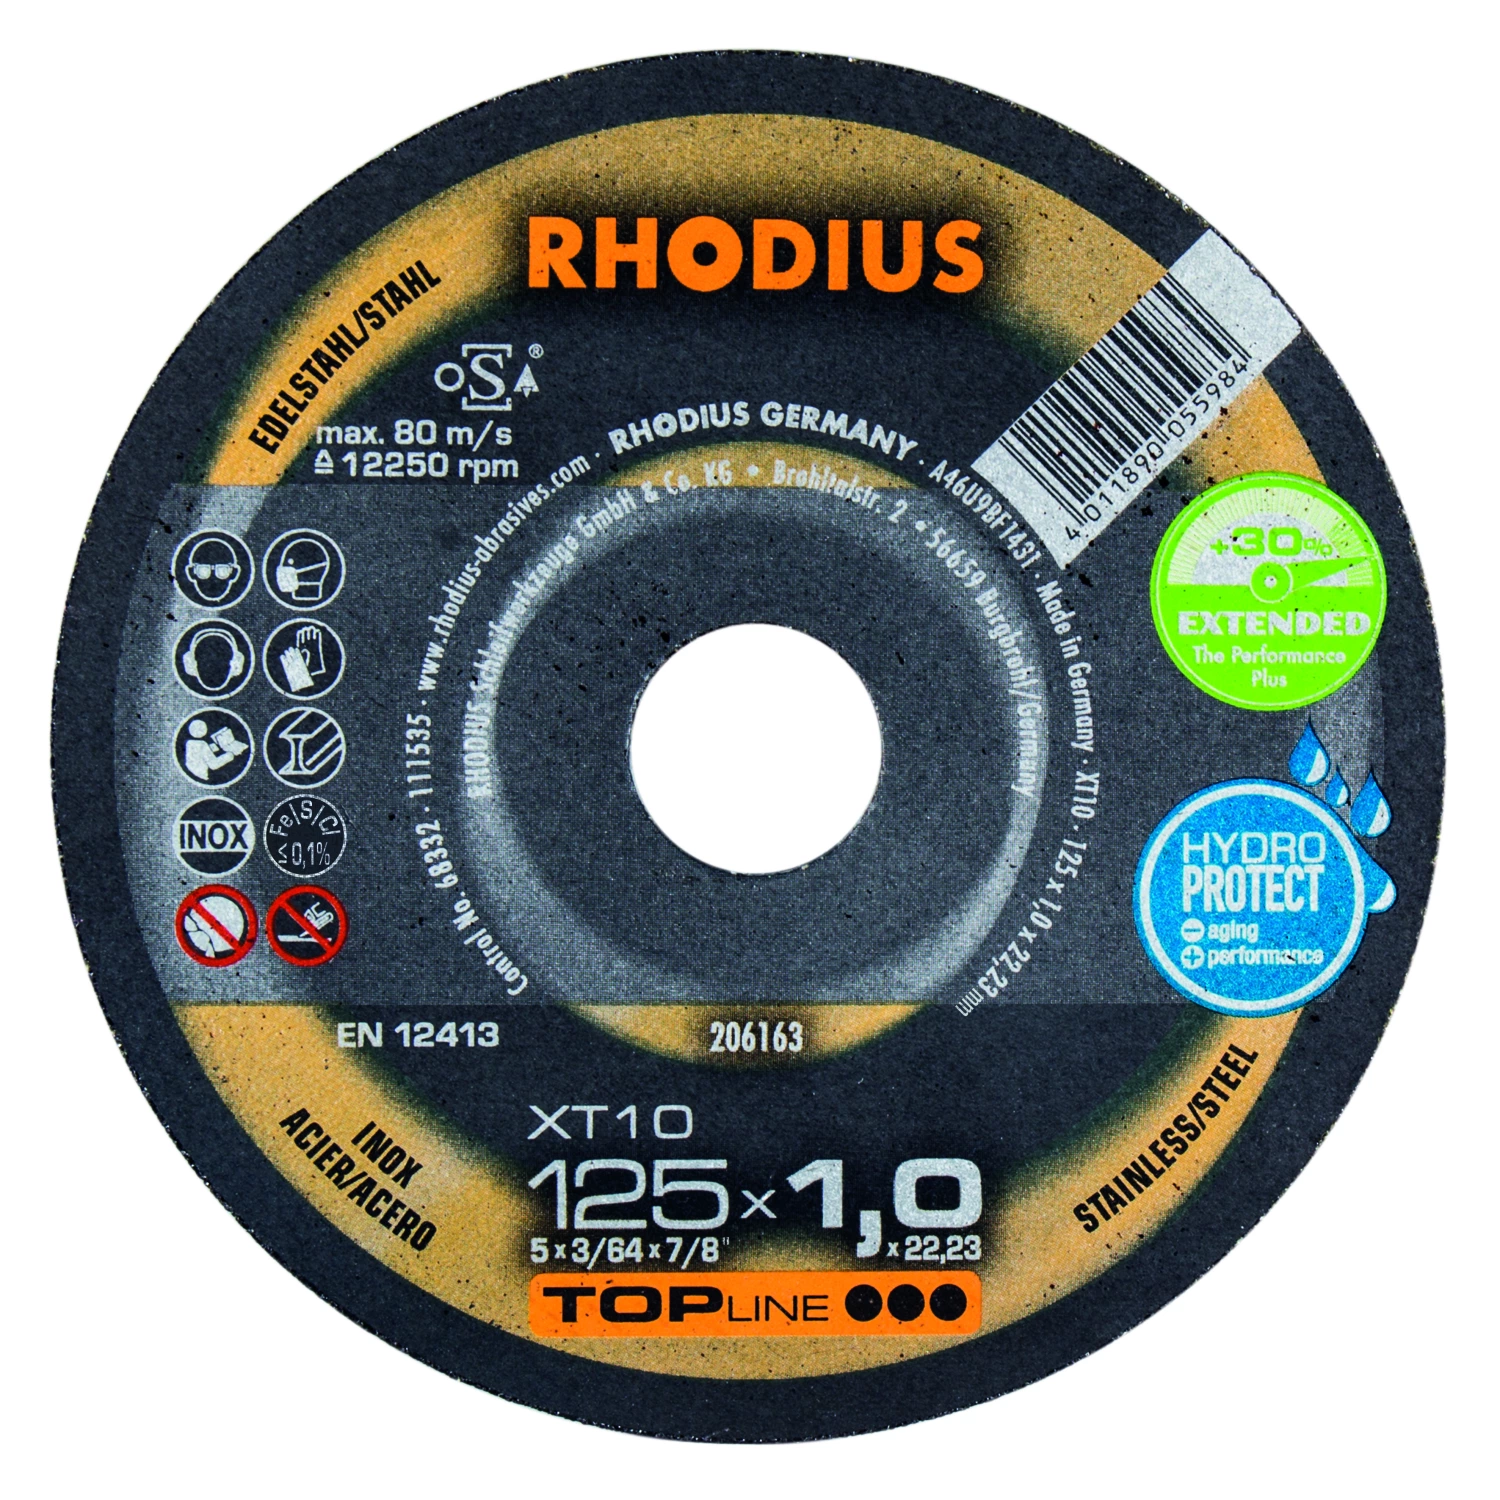 Rhodius 206163 XT10 TOPline lll Disque à tronçonner extra fin 125 x 22,23 x 1,0mm (50 pcs)-image